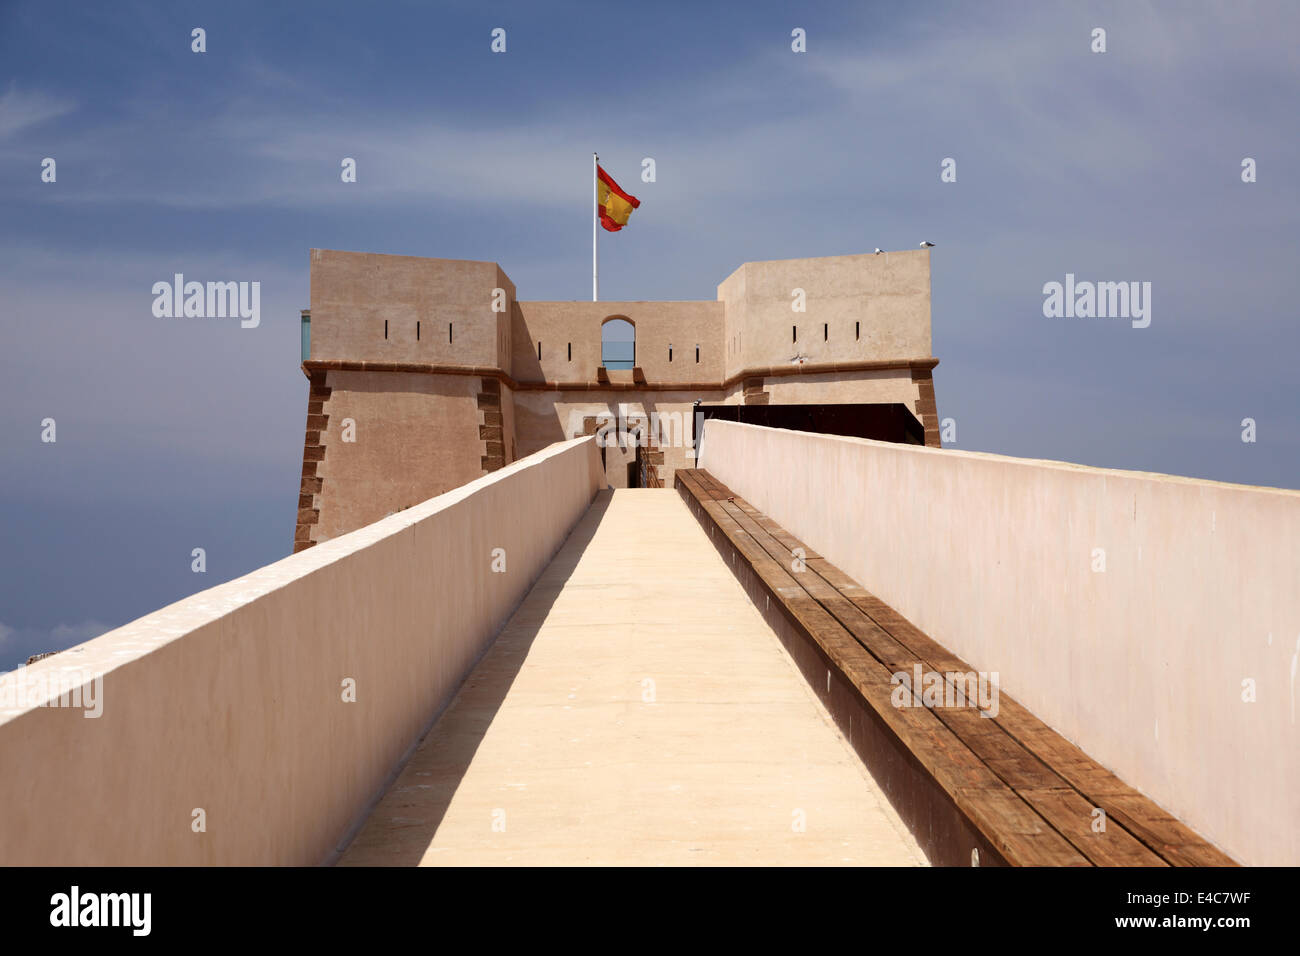 Historic fortress Castillo de San Juan in mediterranean town Aguilas, province of Murcia, Spain Stock Photo